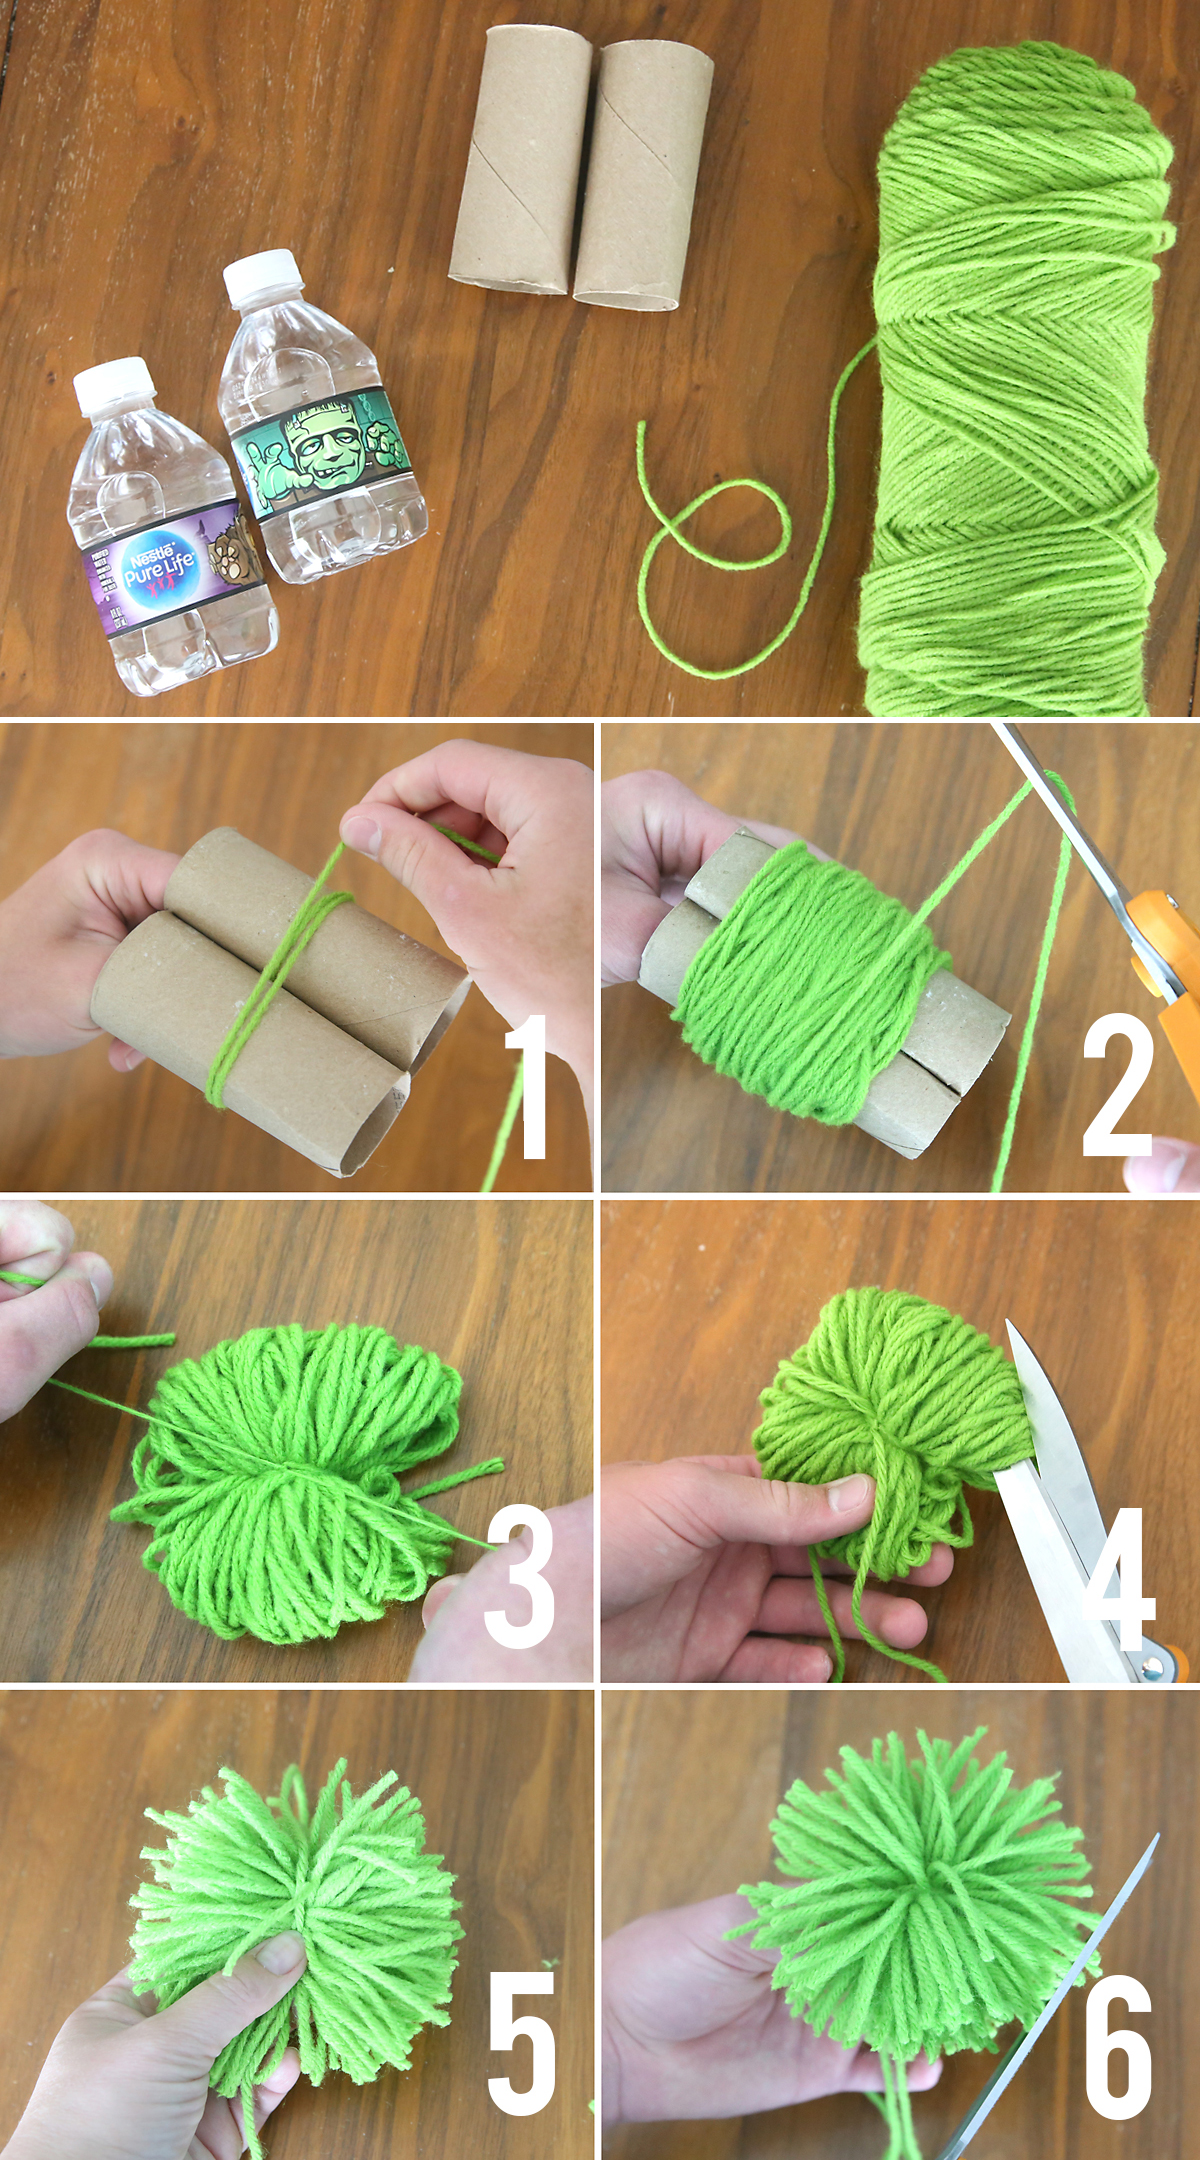 Steps for making yarn pom pom: wrap yarn around two empty toilet paper rolls, tie yarn between them, pull tie tight, snip open loops of yarn